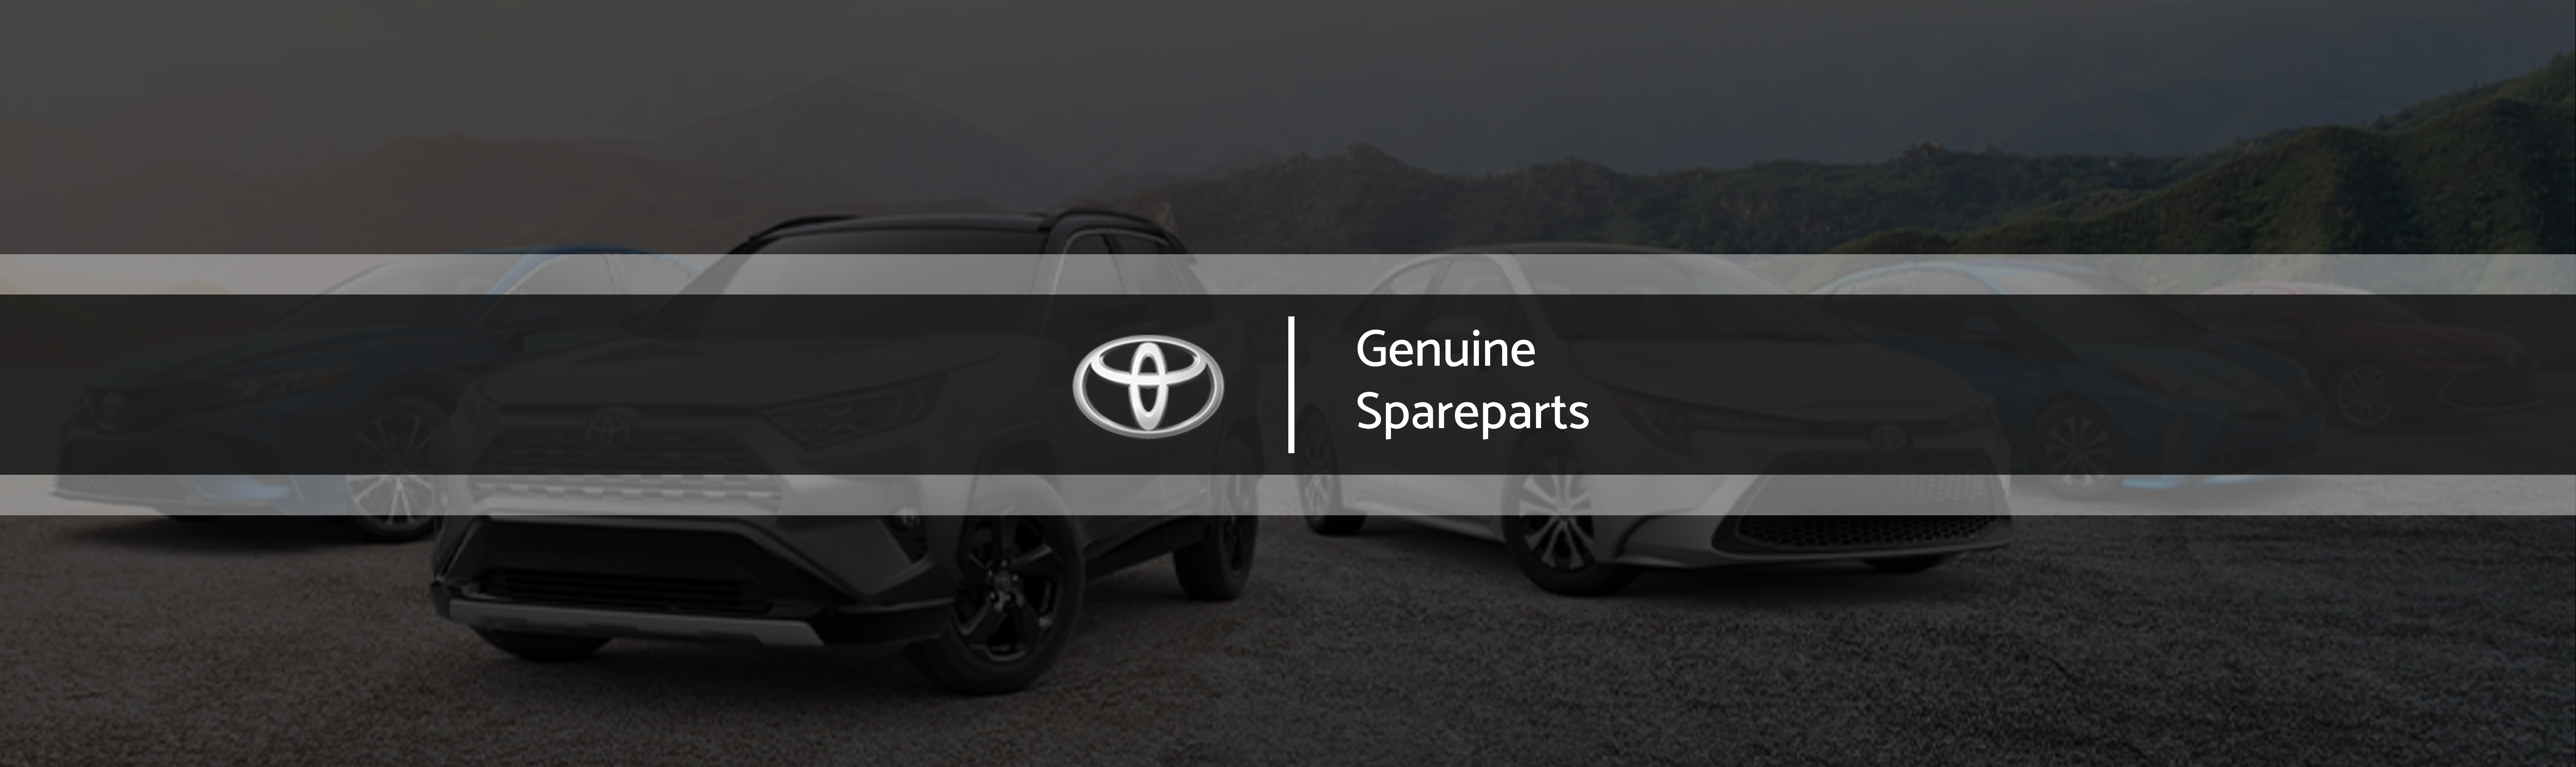 Toyota Genuine Spare Parts Supplier In Dubai - UAE